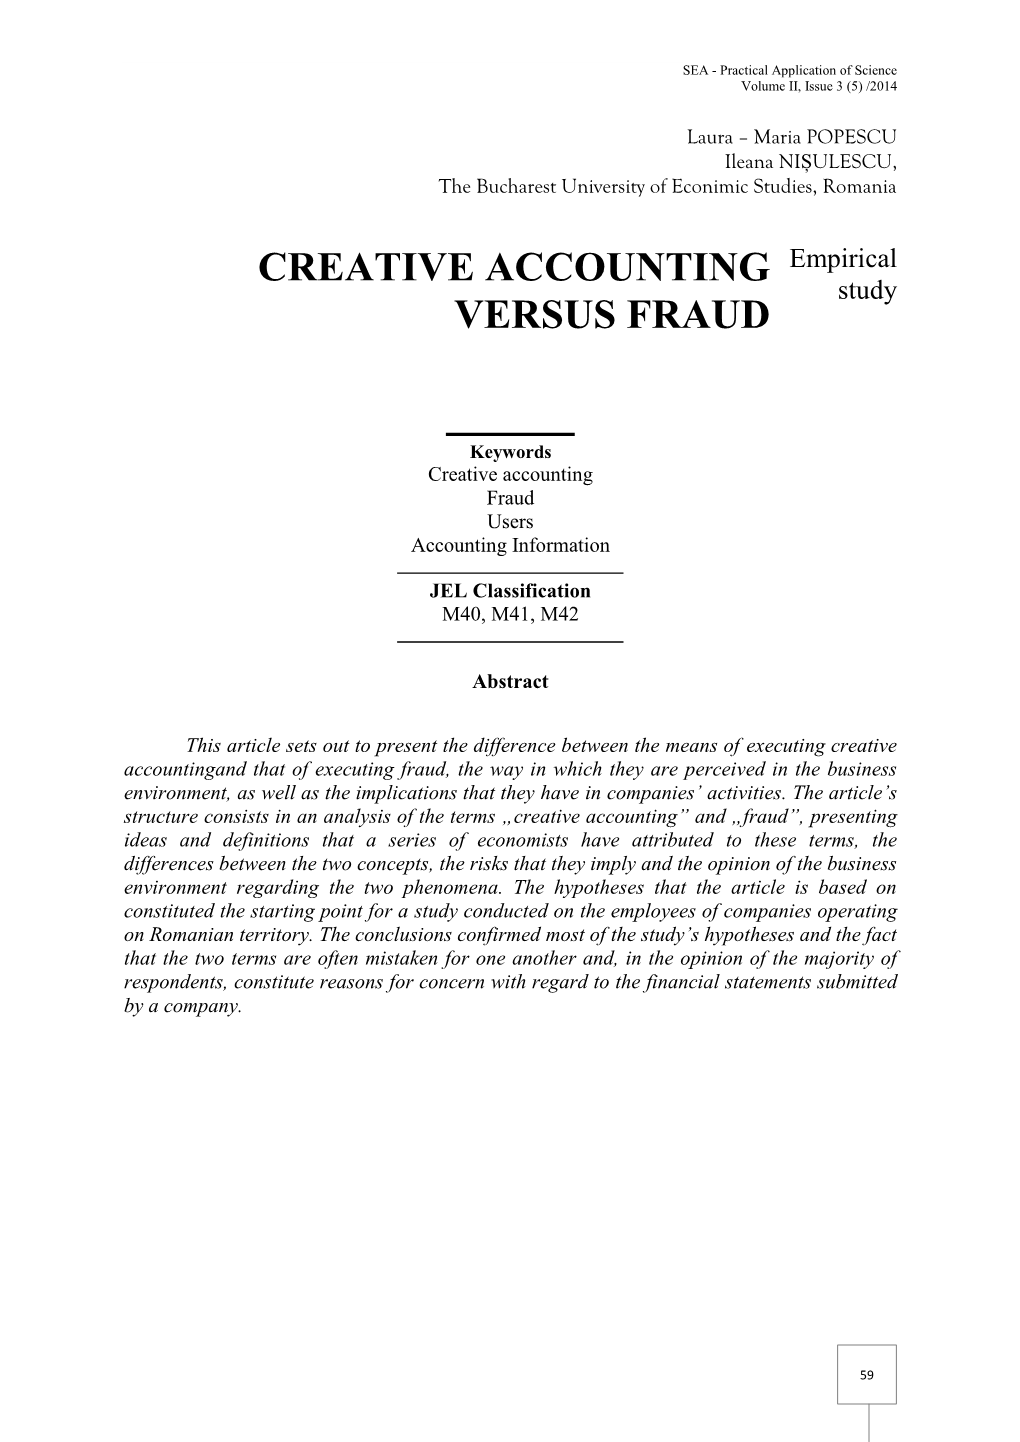 Creative Accounting Versus Fraud